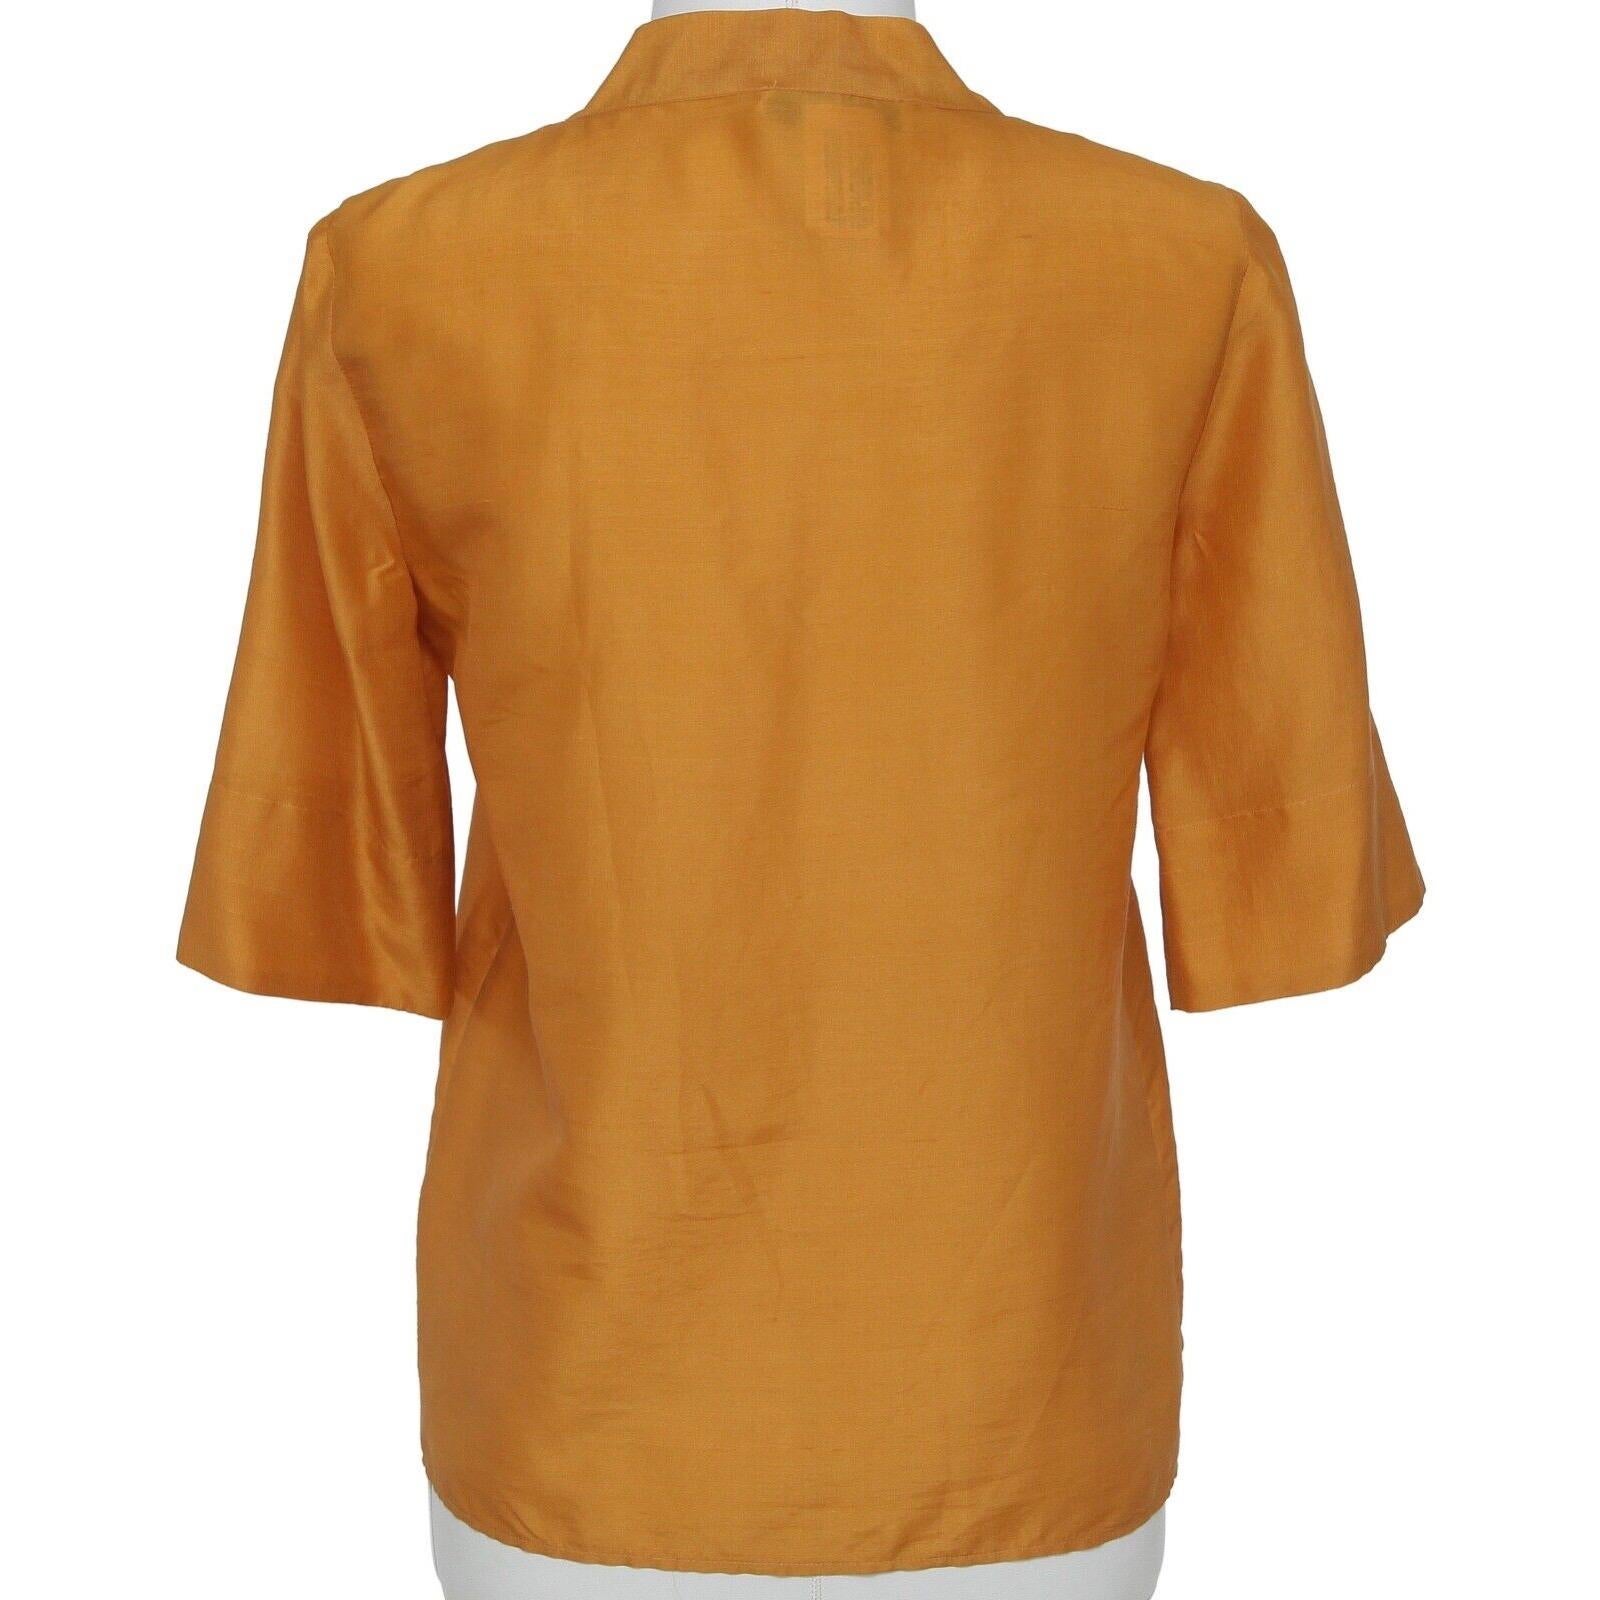 CHLOE Blouse Shirt Marigold Yellow Orange Silk Short Sleeve Sz 36 Fall 2007 For Sale 4